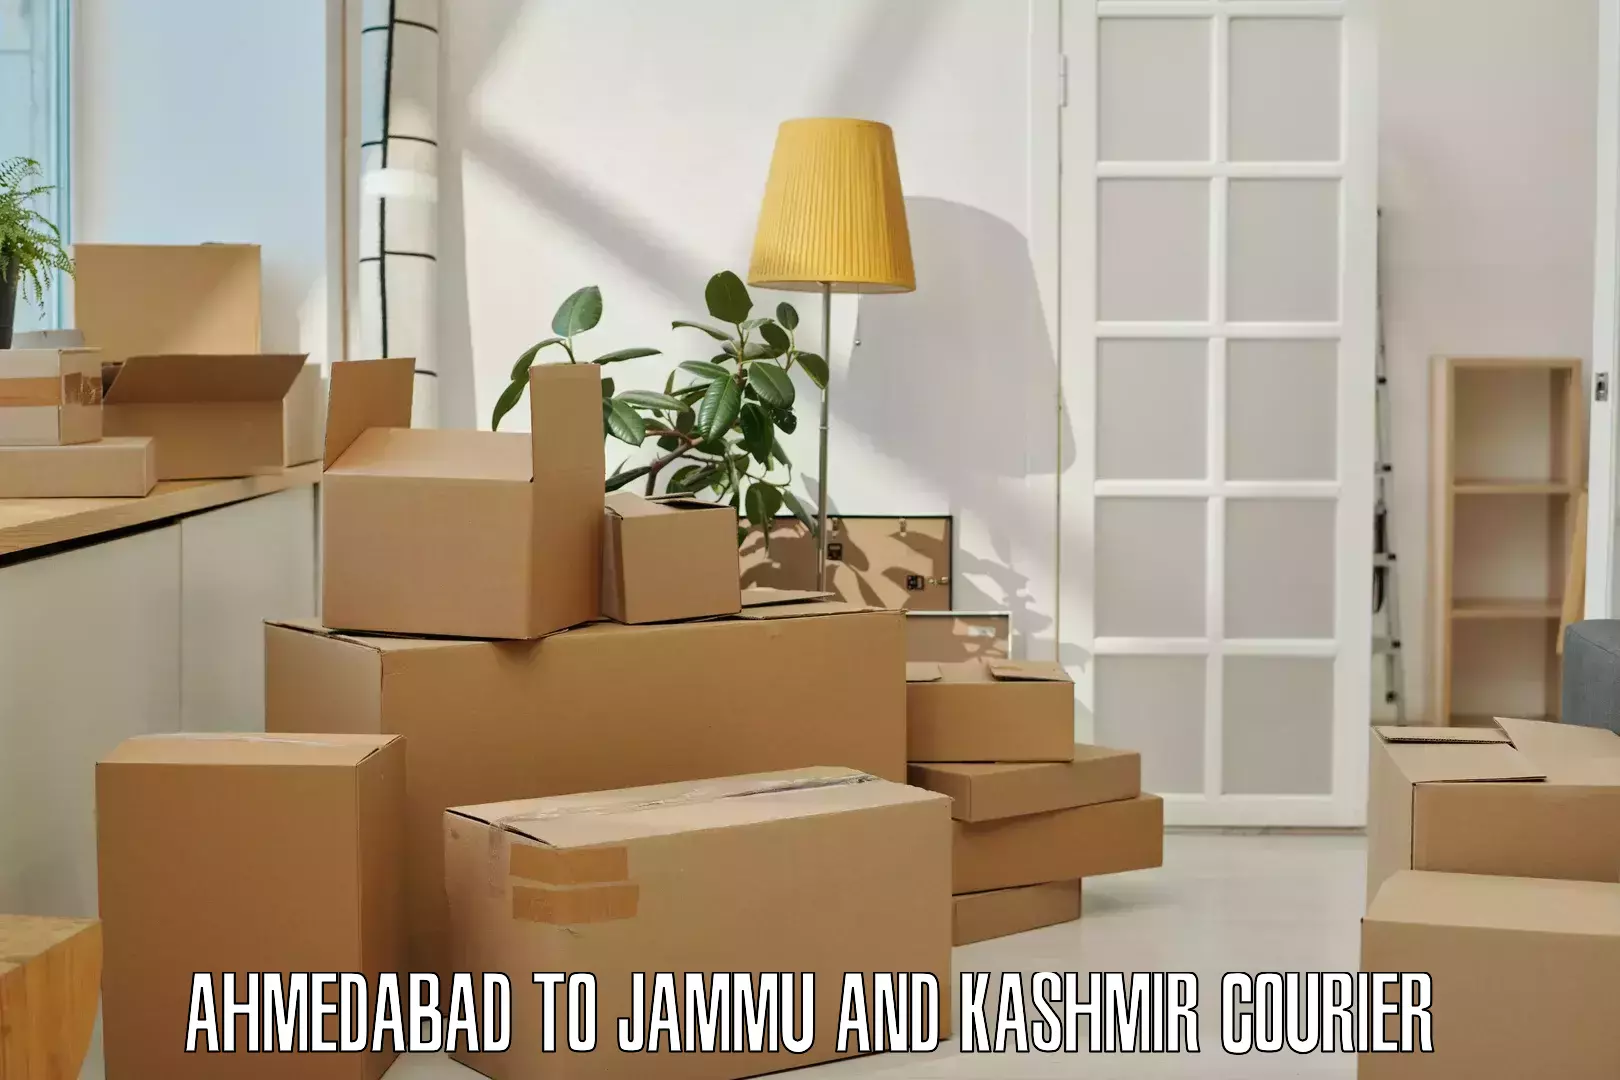 Courier membership in Ahmedabad to Srinagar Kashmir